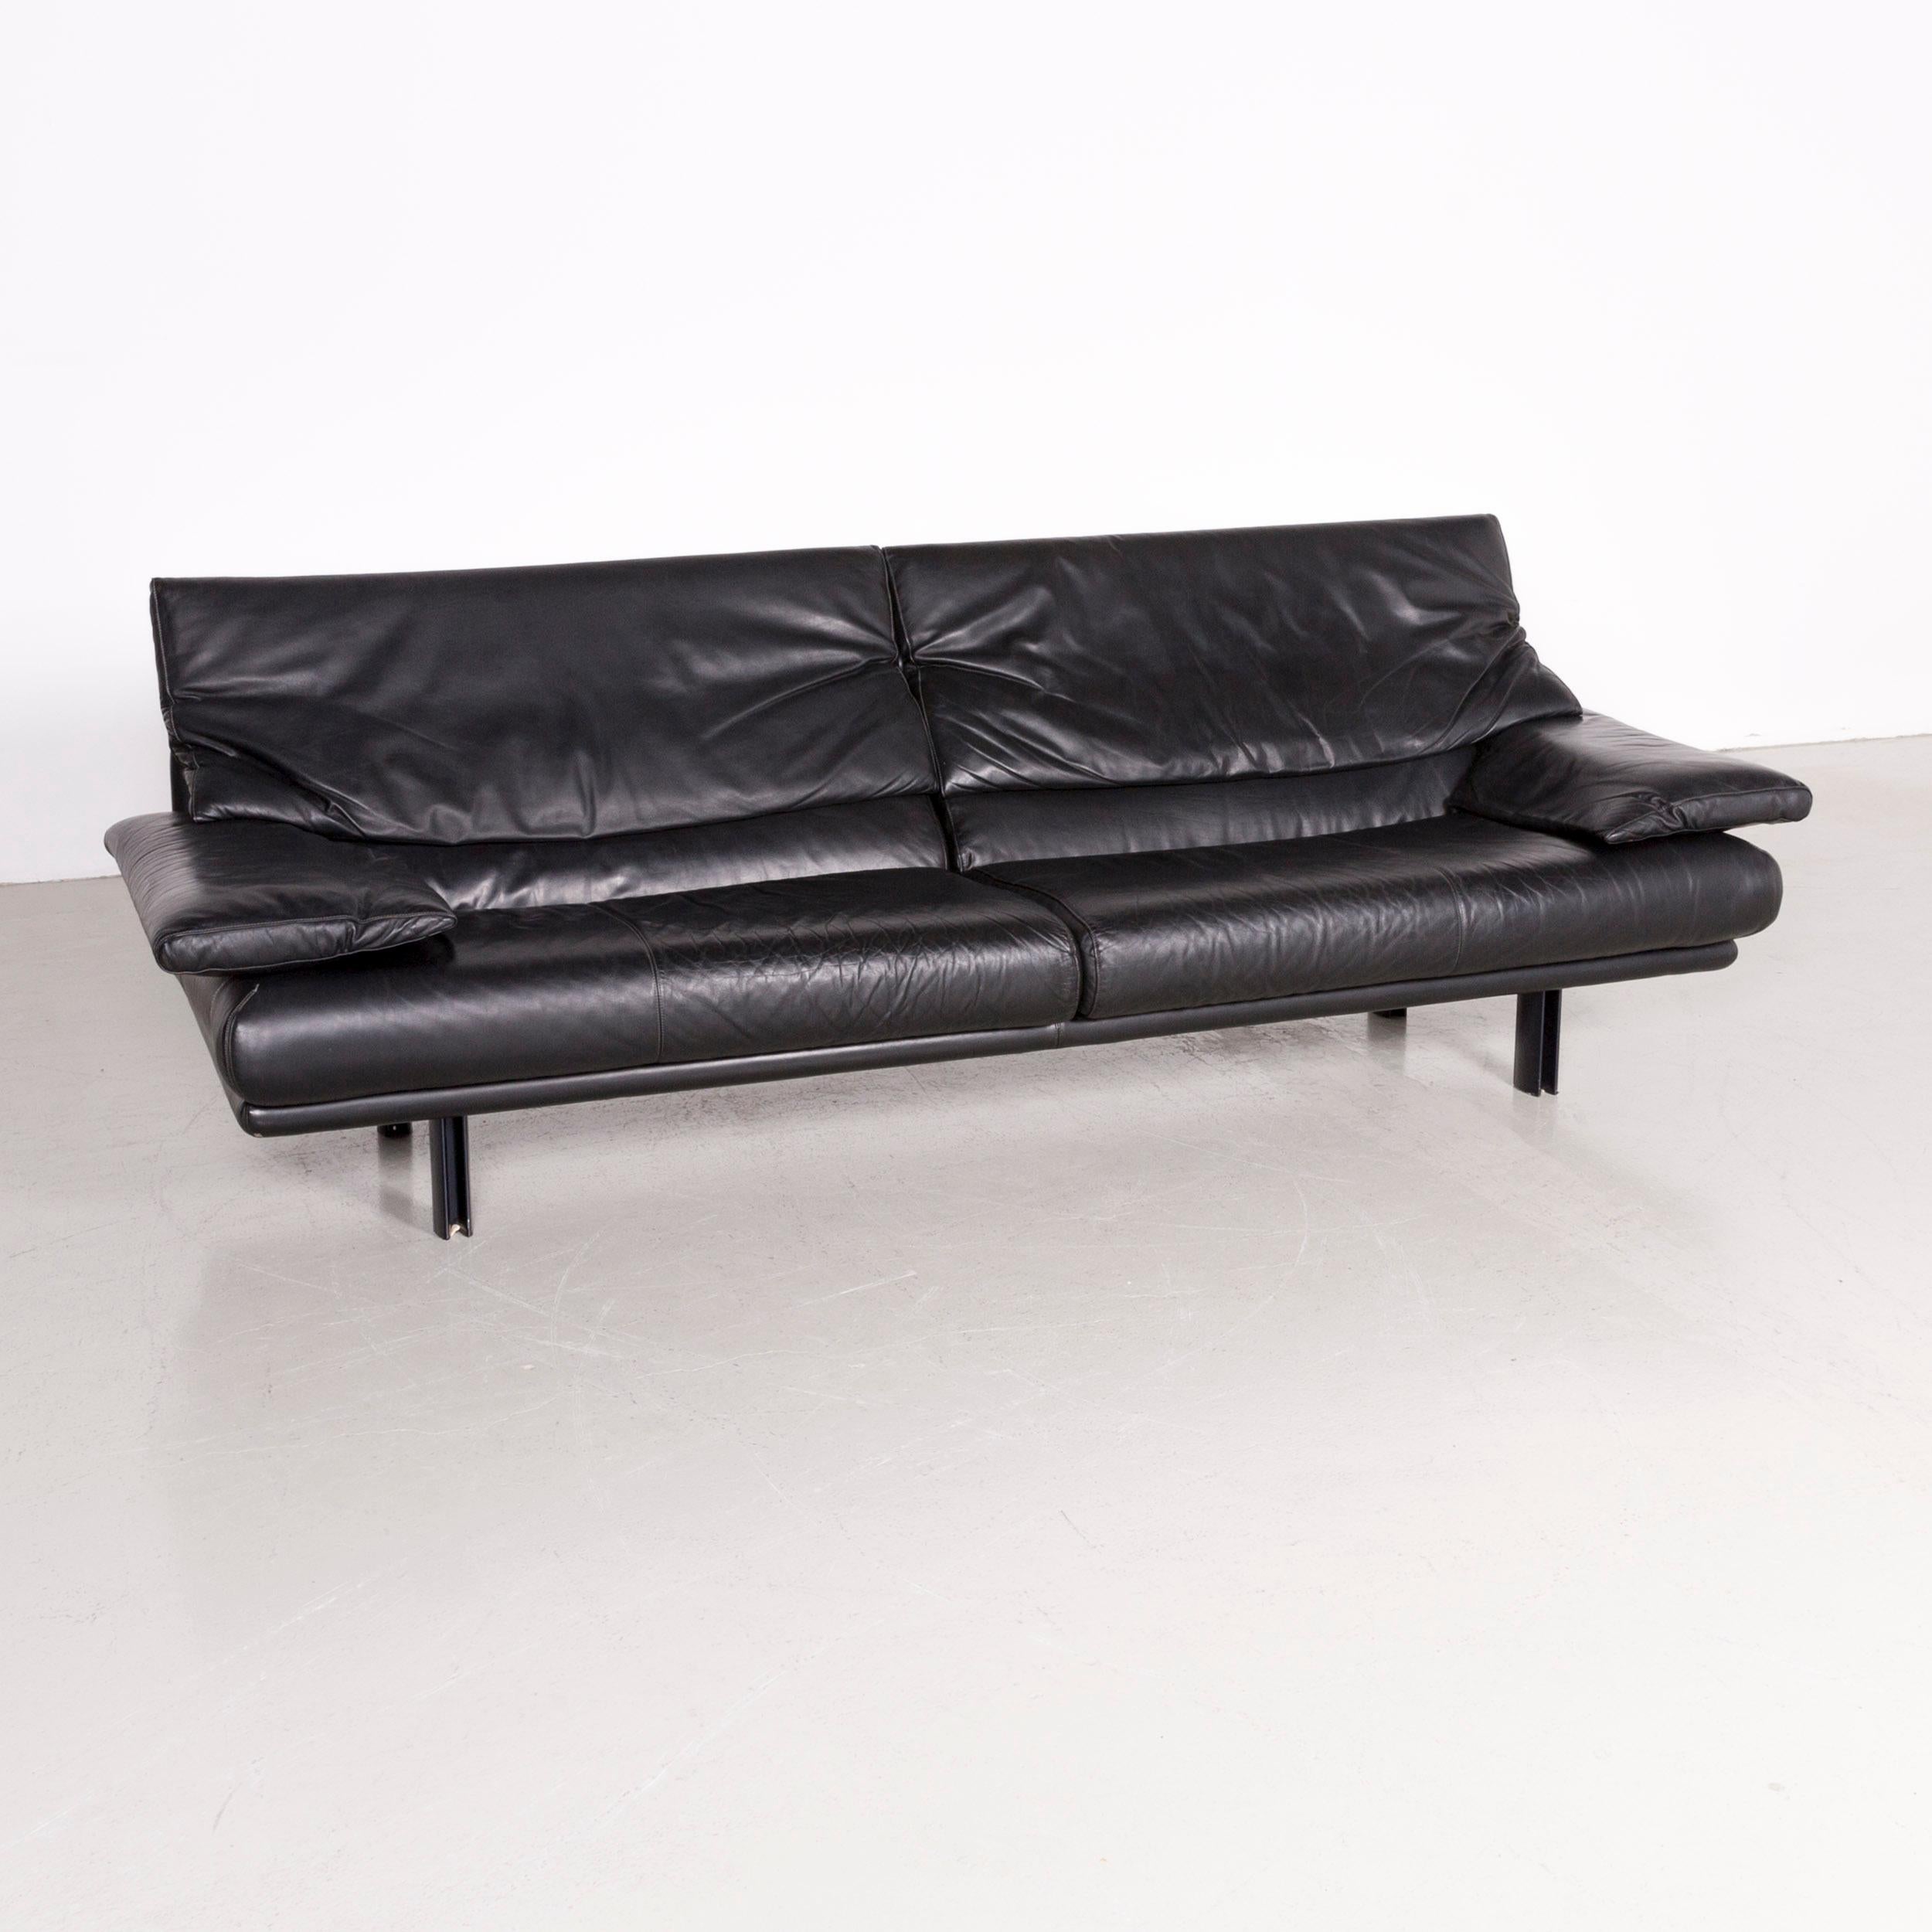 B&B Italia Alanda designer leather sofa black three-seat couch relax.